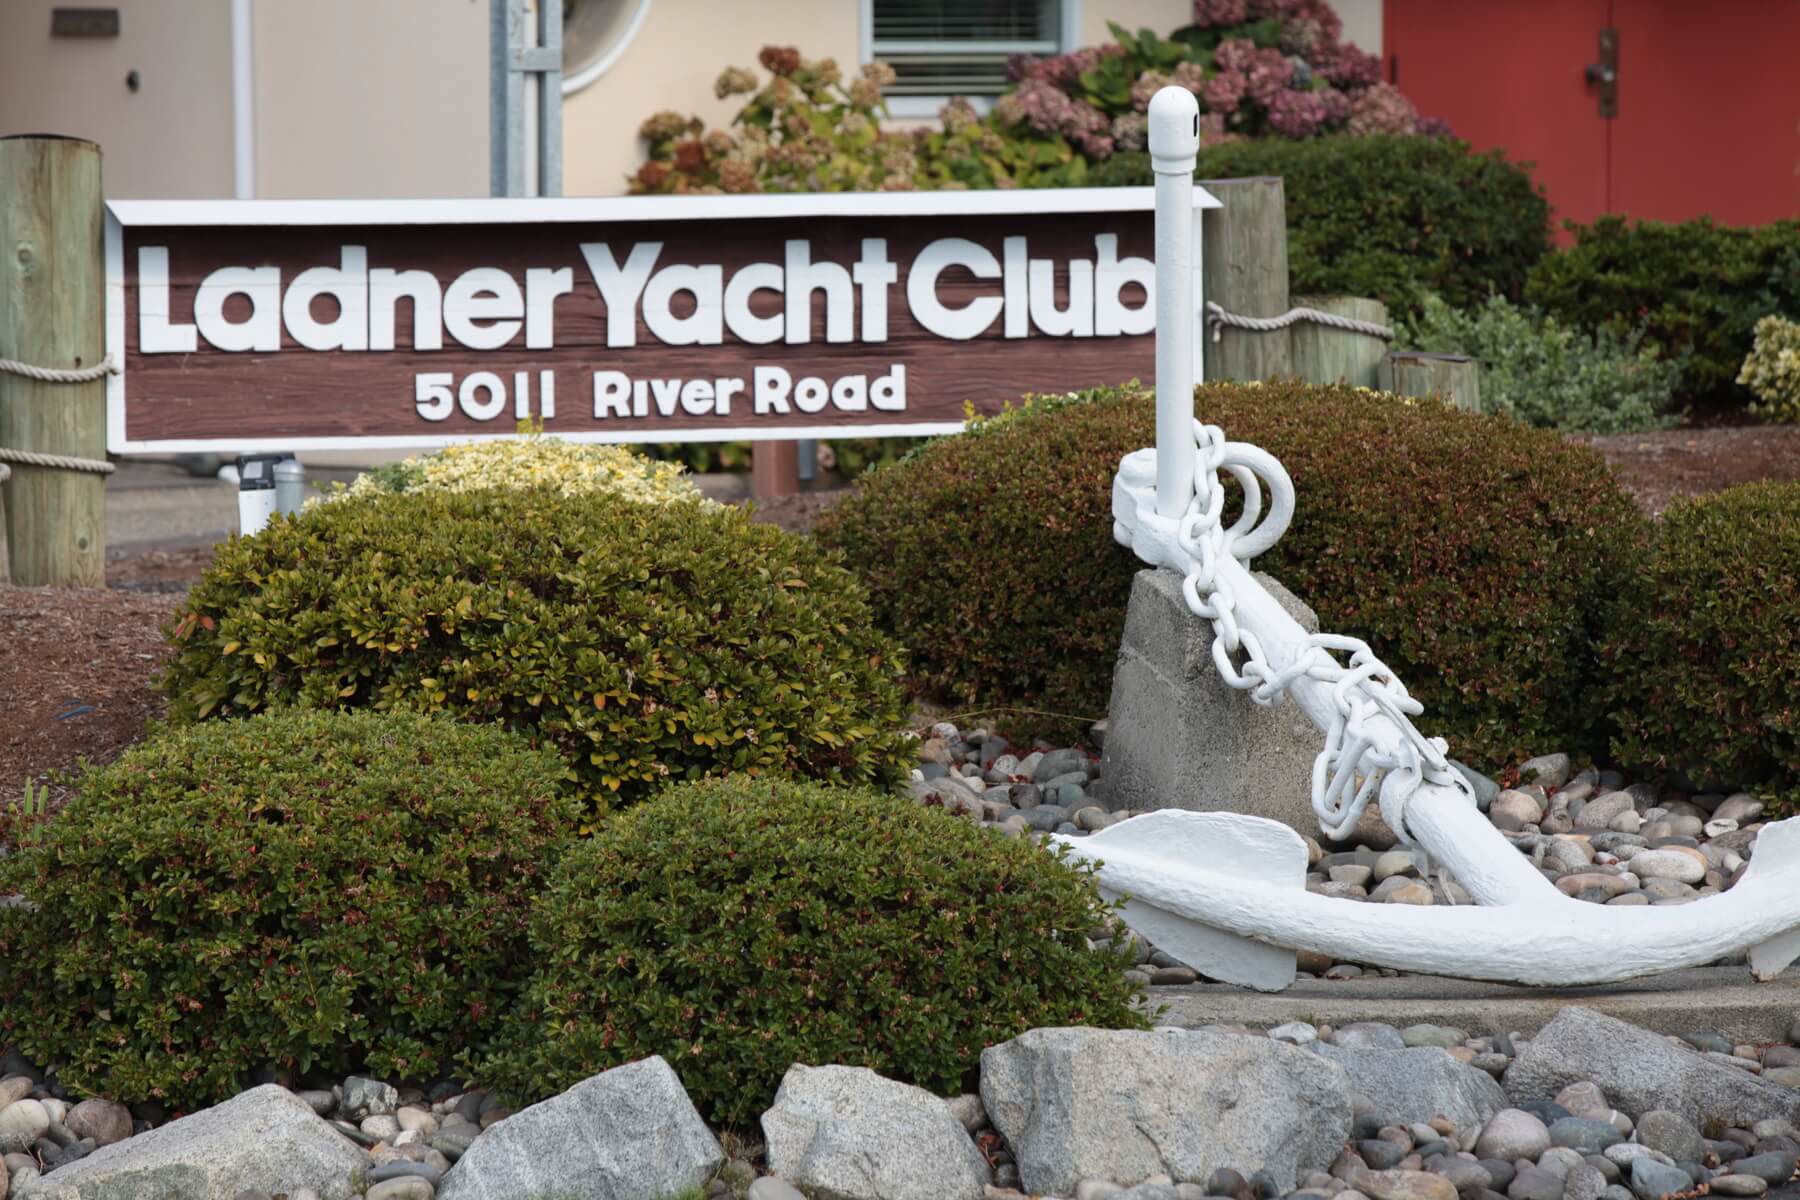 Ladner Yacht Club